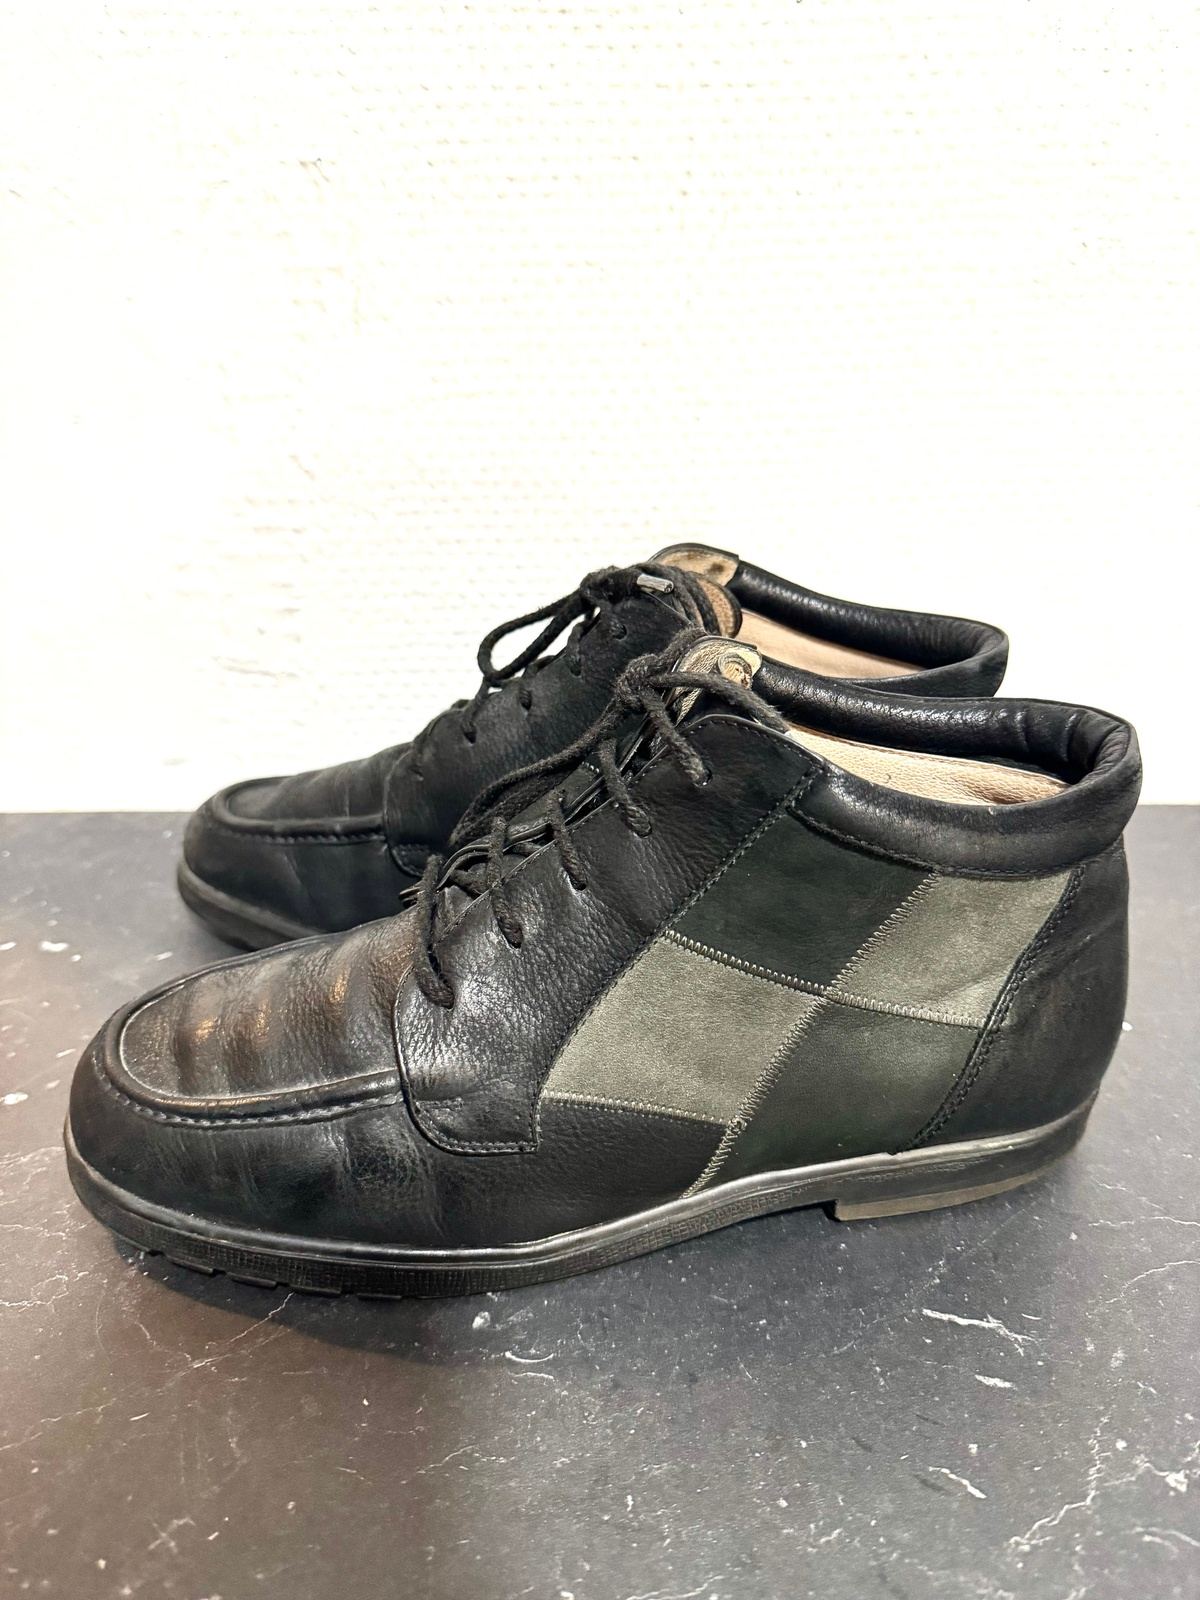 Vintage leather shoes